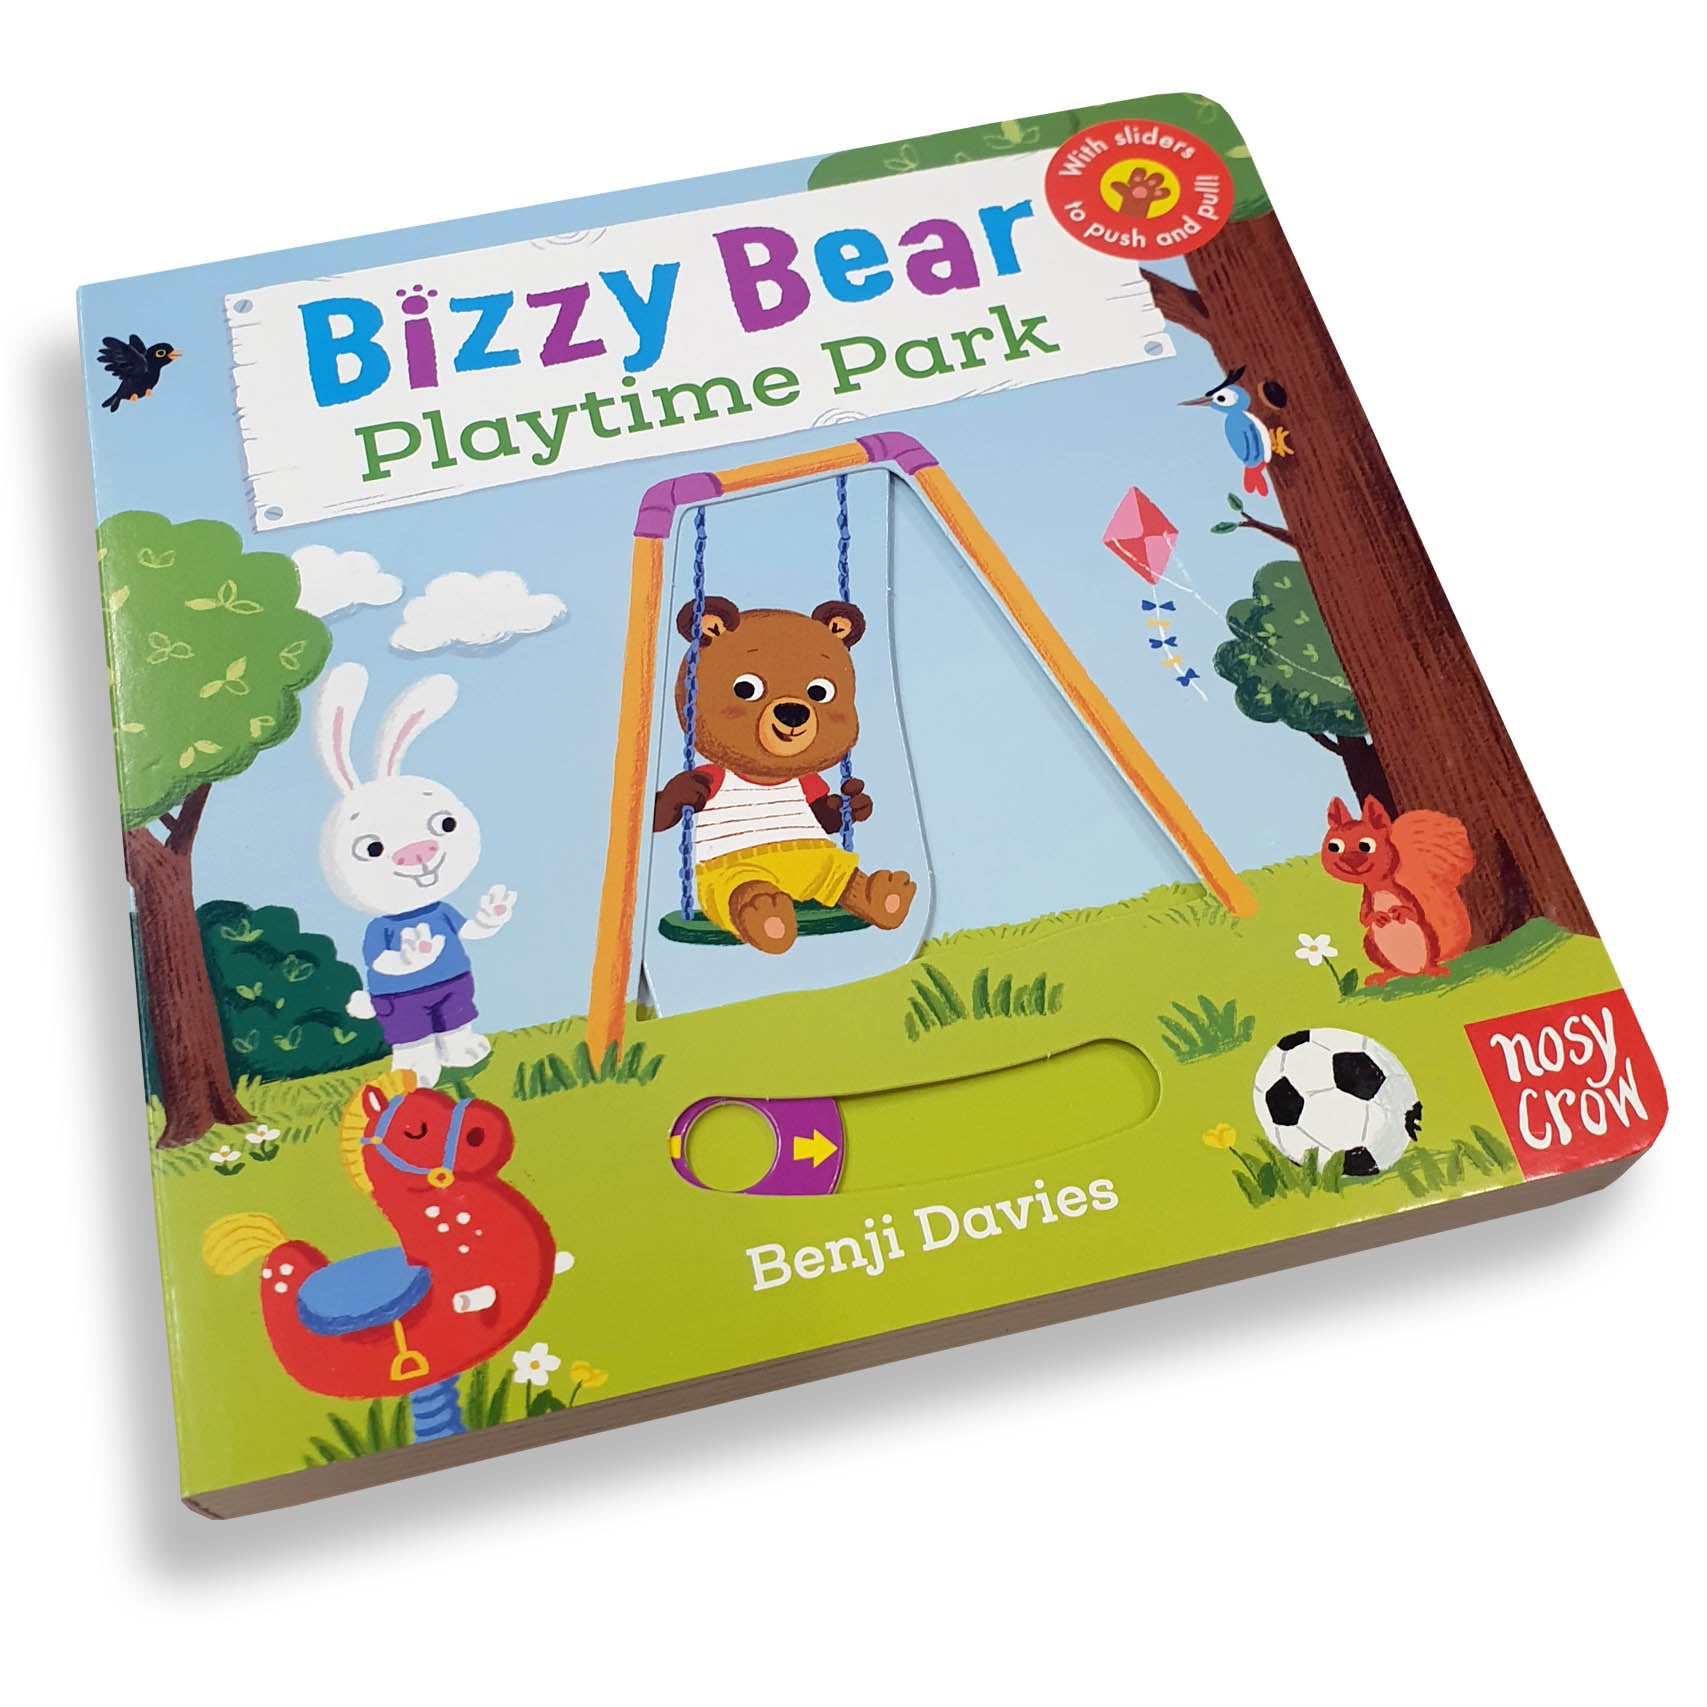 Bizzy Bear Playtime Park - Deb's Hidden Treasures